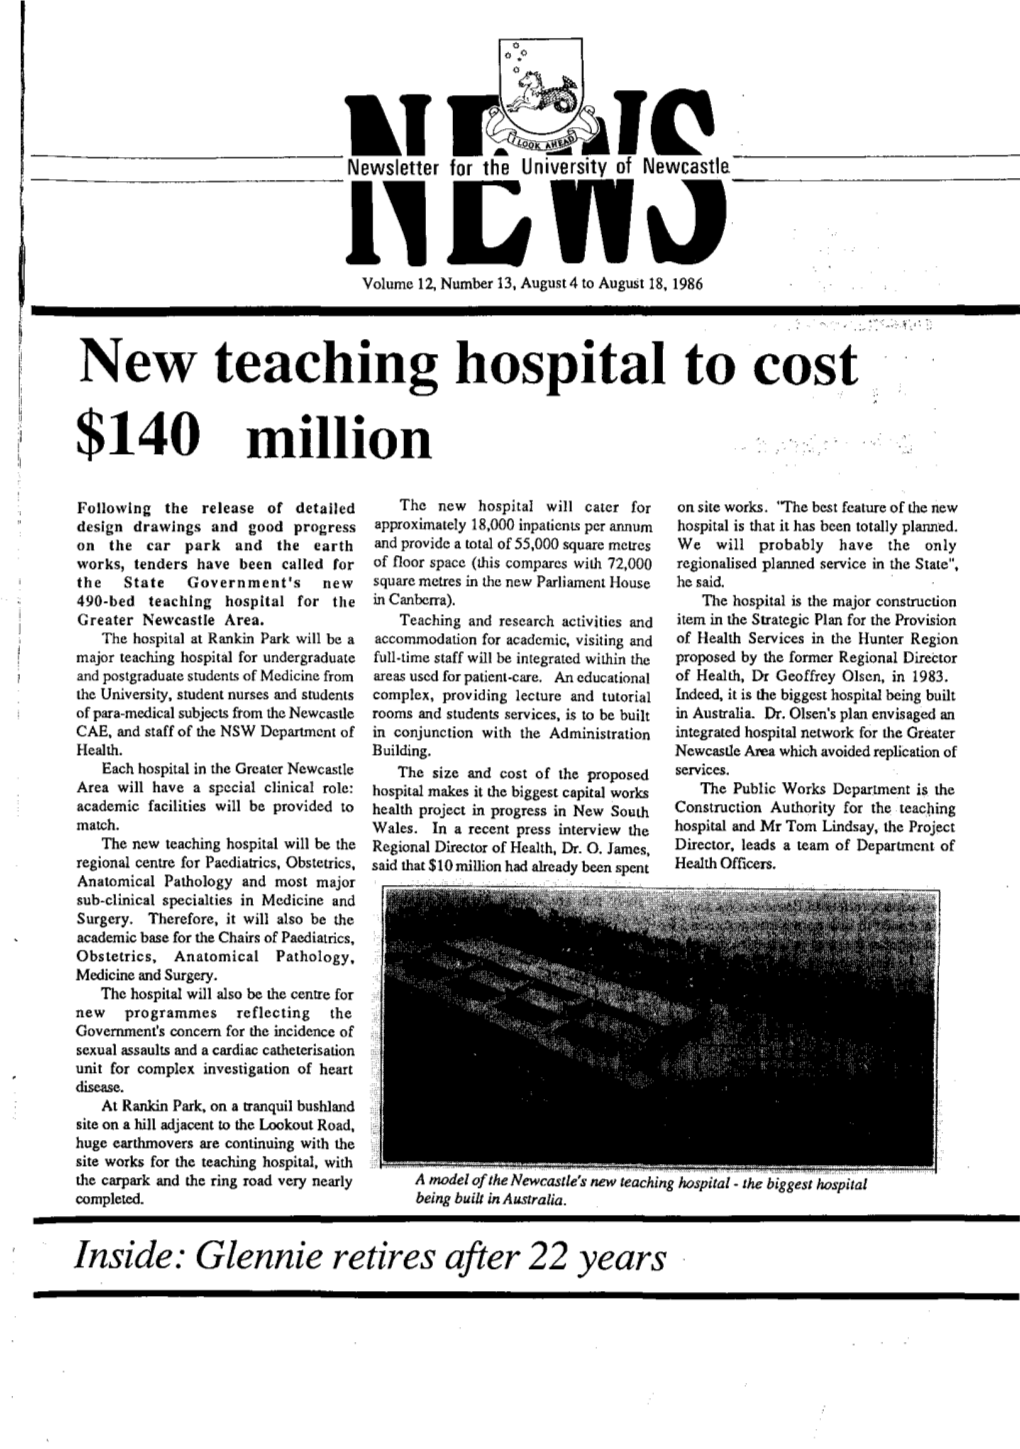 The University News, Vol. 12, No. 13, August 4-18, 1986